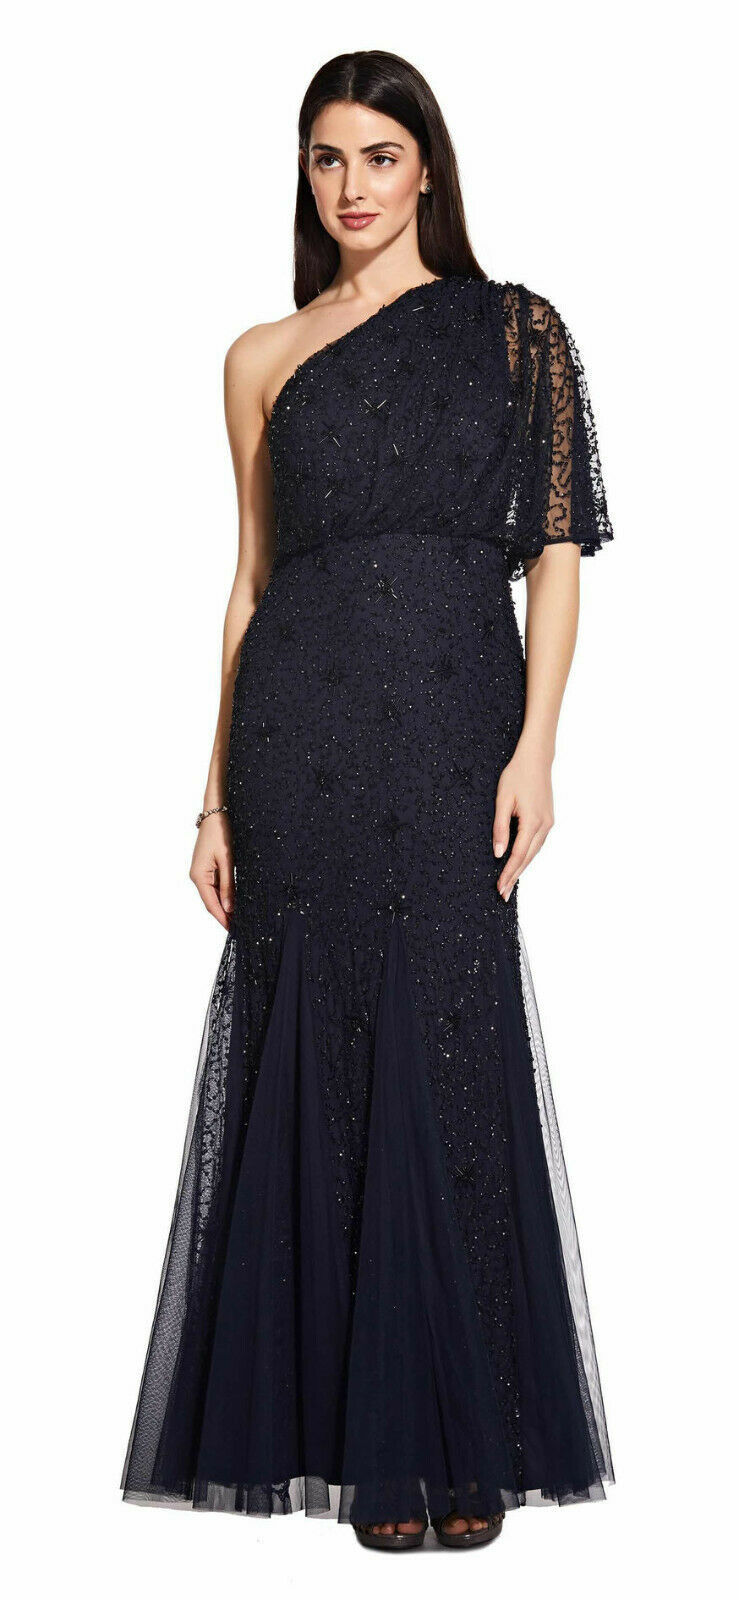 Adrianna Papell Midnight/Black Beaded One Shoulder Dress  Petites 12P    $349  - $246.51